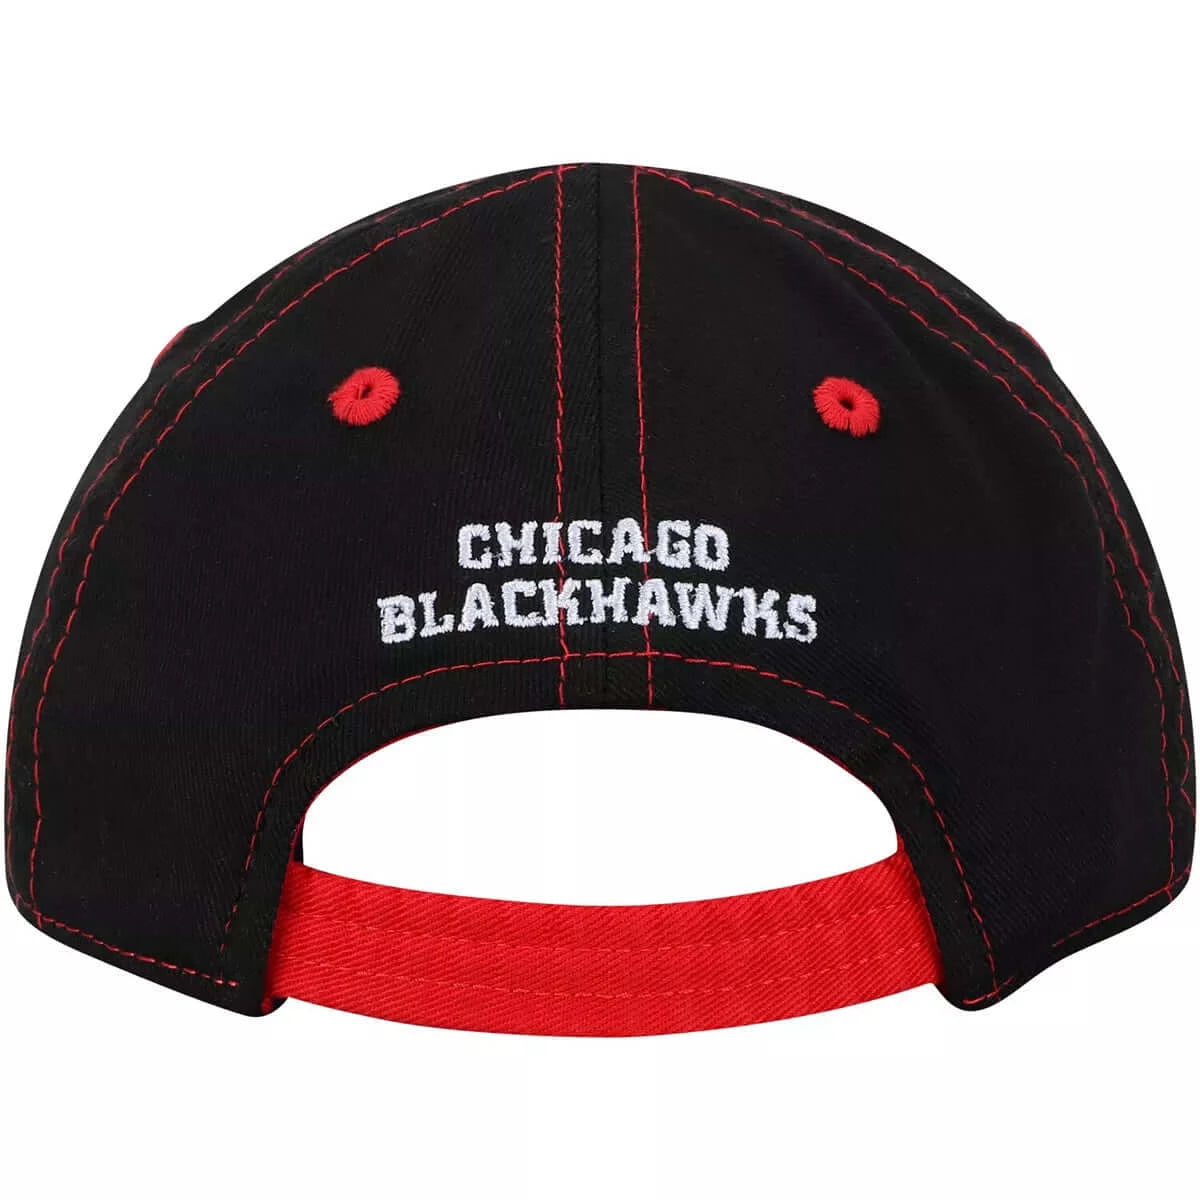 Chicago Blackhawks Chainstitch Slouch Infant Black/Red  Adjustable Hat